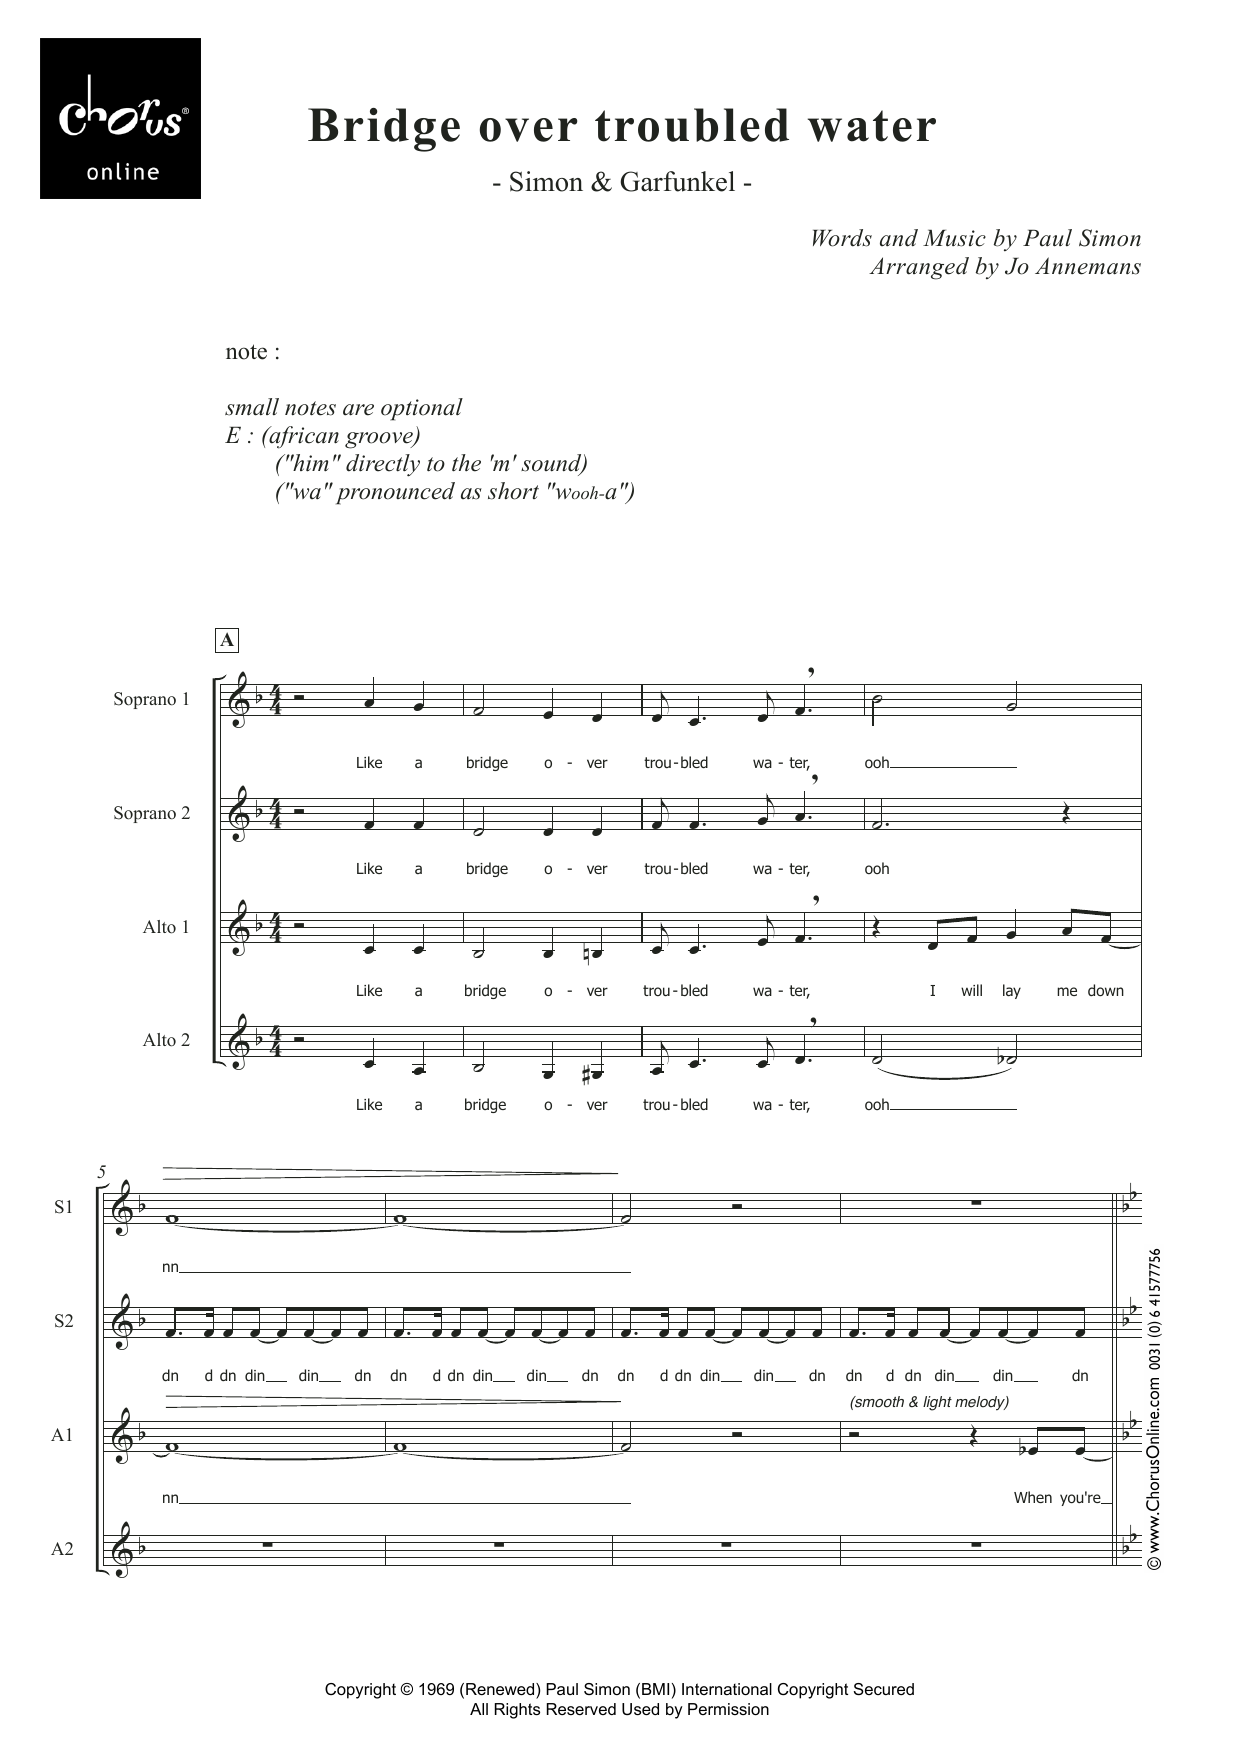 Simon & Garfunkel Bridge Over Troubled Water (arr. Jo Annemans) sheet music notes printable PDF score